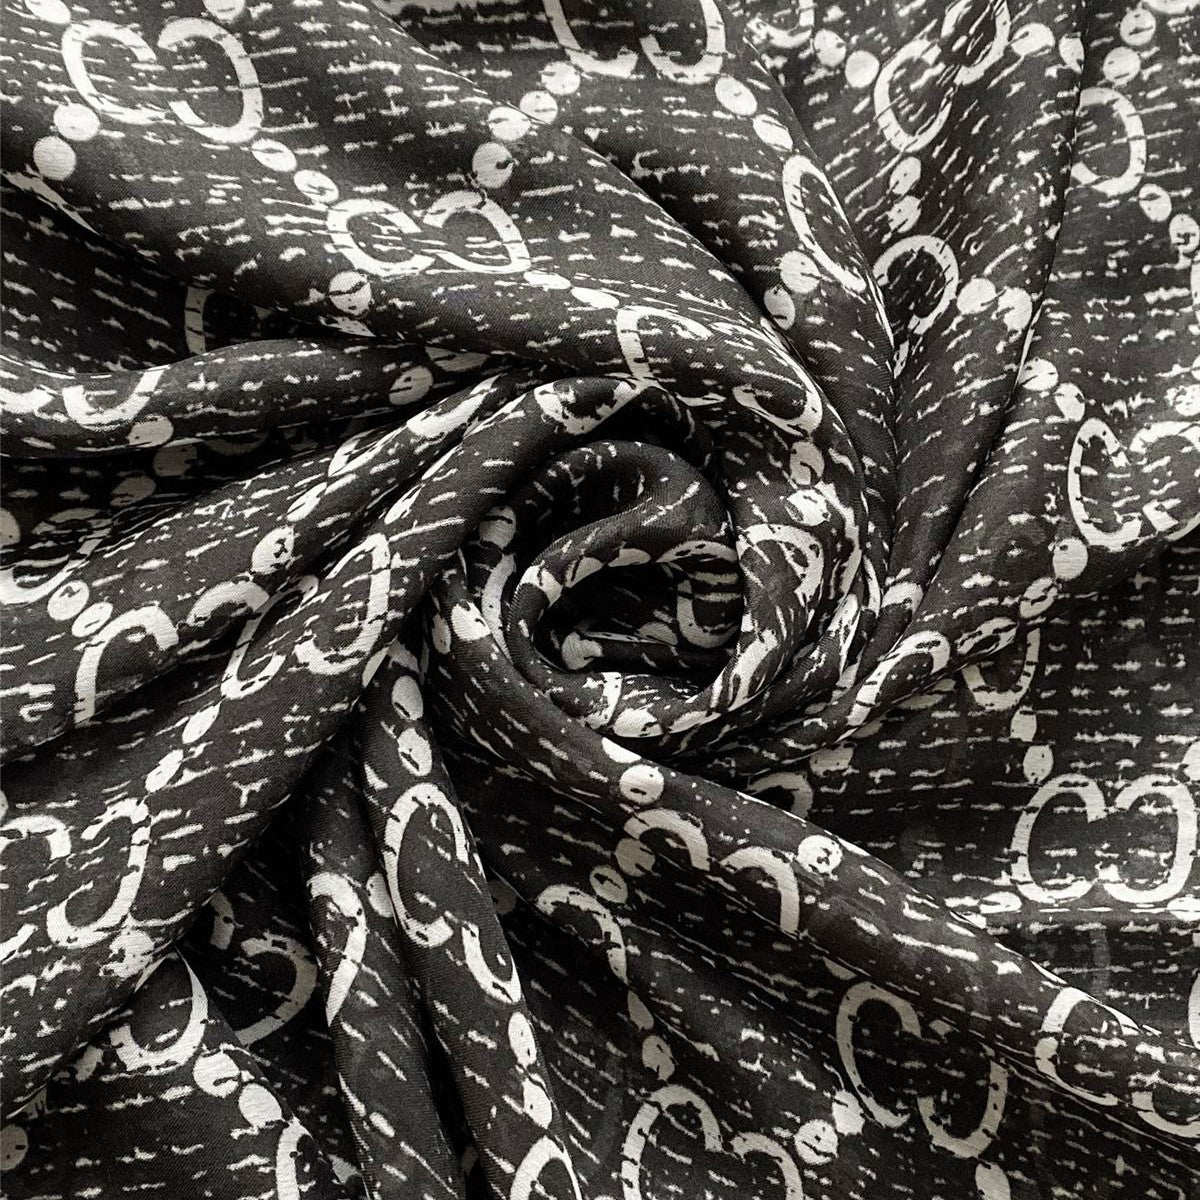 Šála-šátek ze 100% Pravého Hedvábí, 90 cm x 180 cm, Černobílý vzor | -80% Akce na Šperky